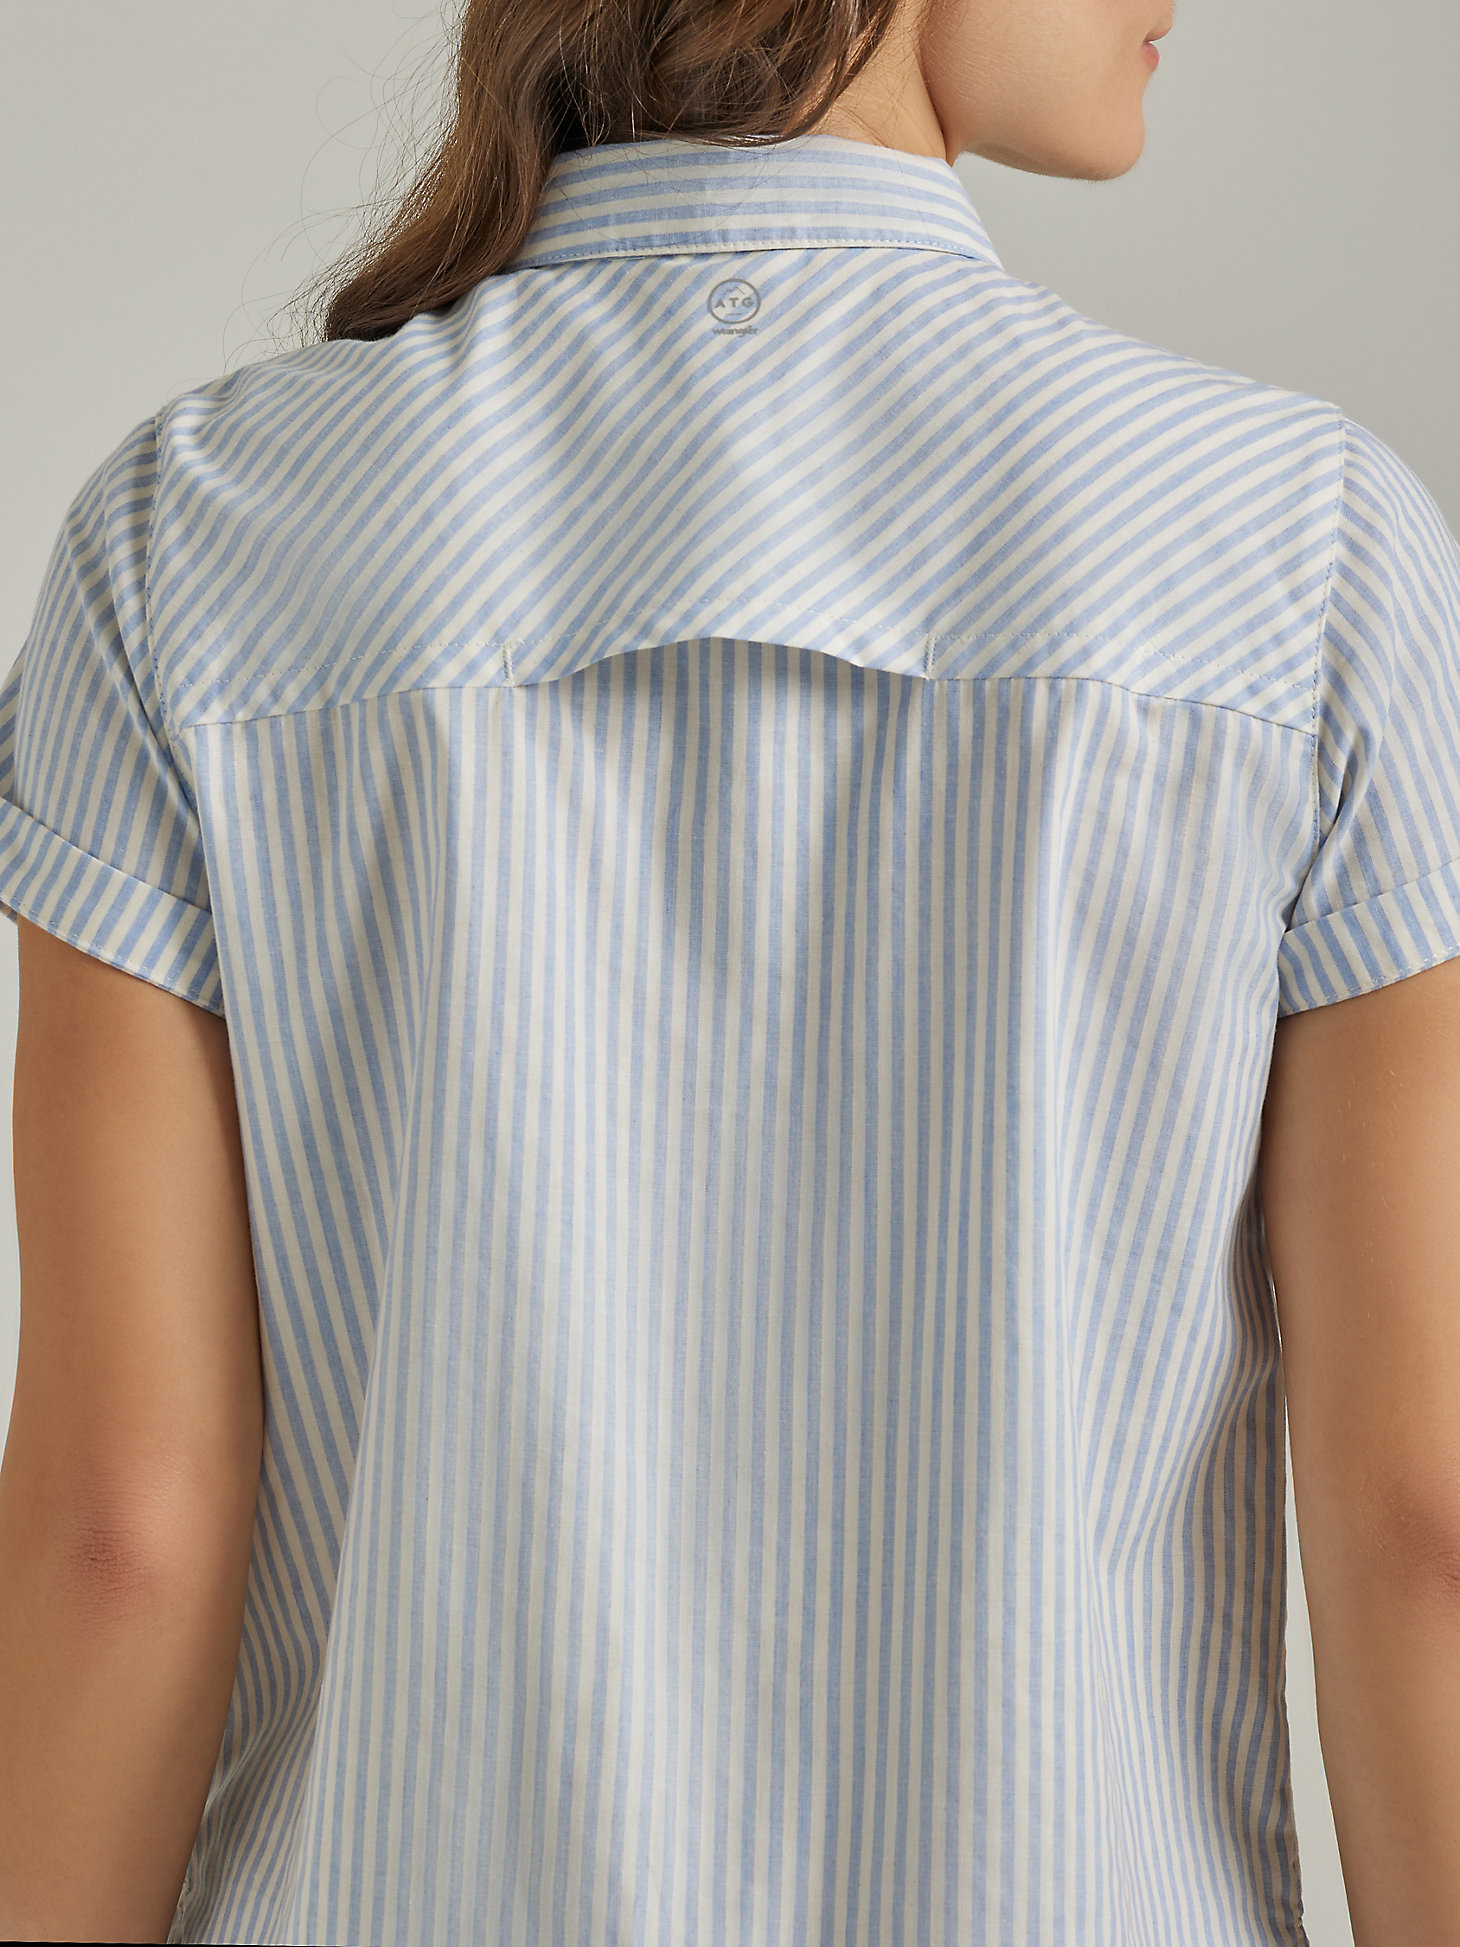 ATG By Wrangler® Women's Breeze Stripe Shirt in Spring Water alternative view 4